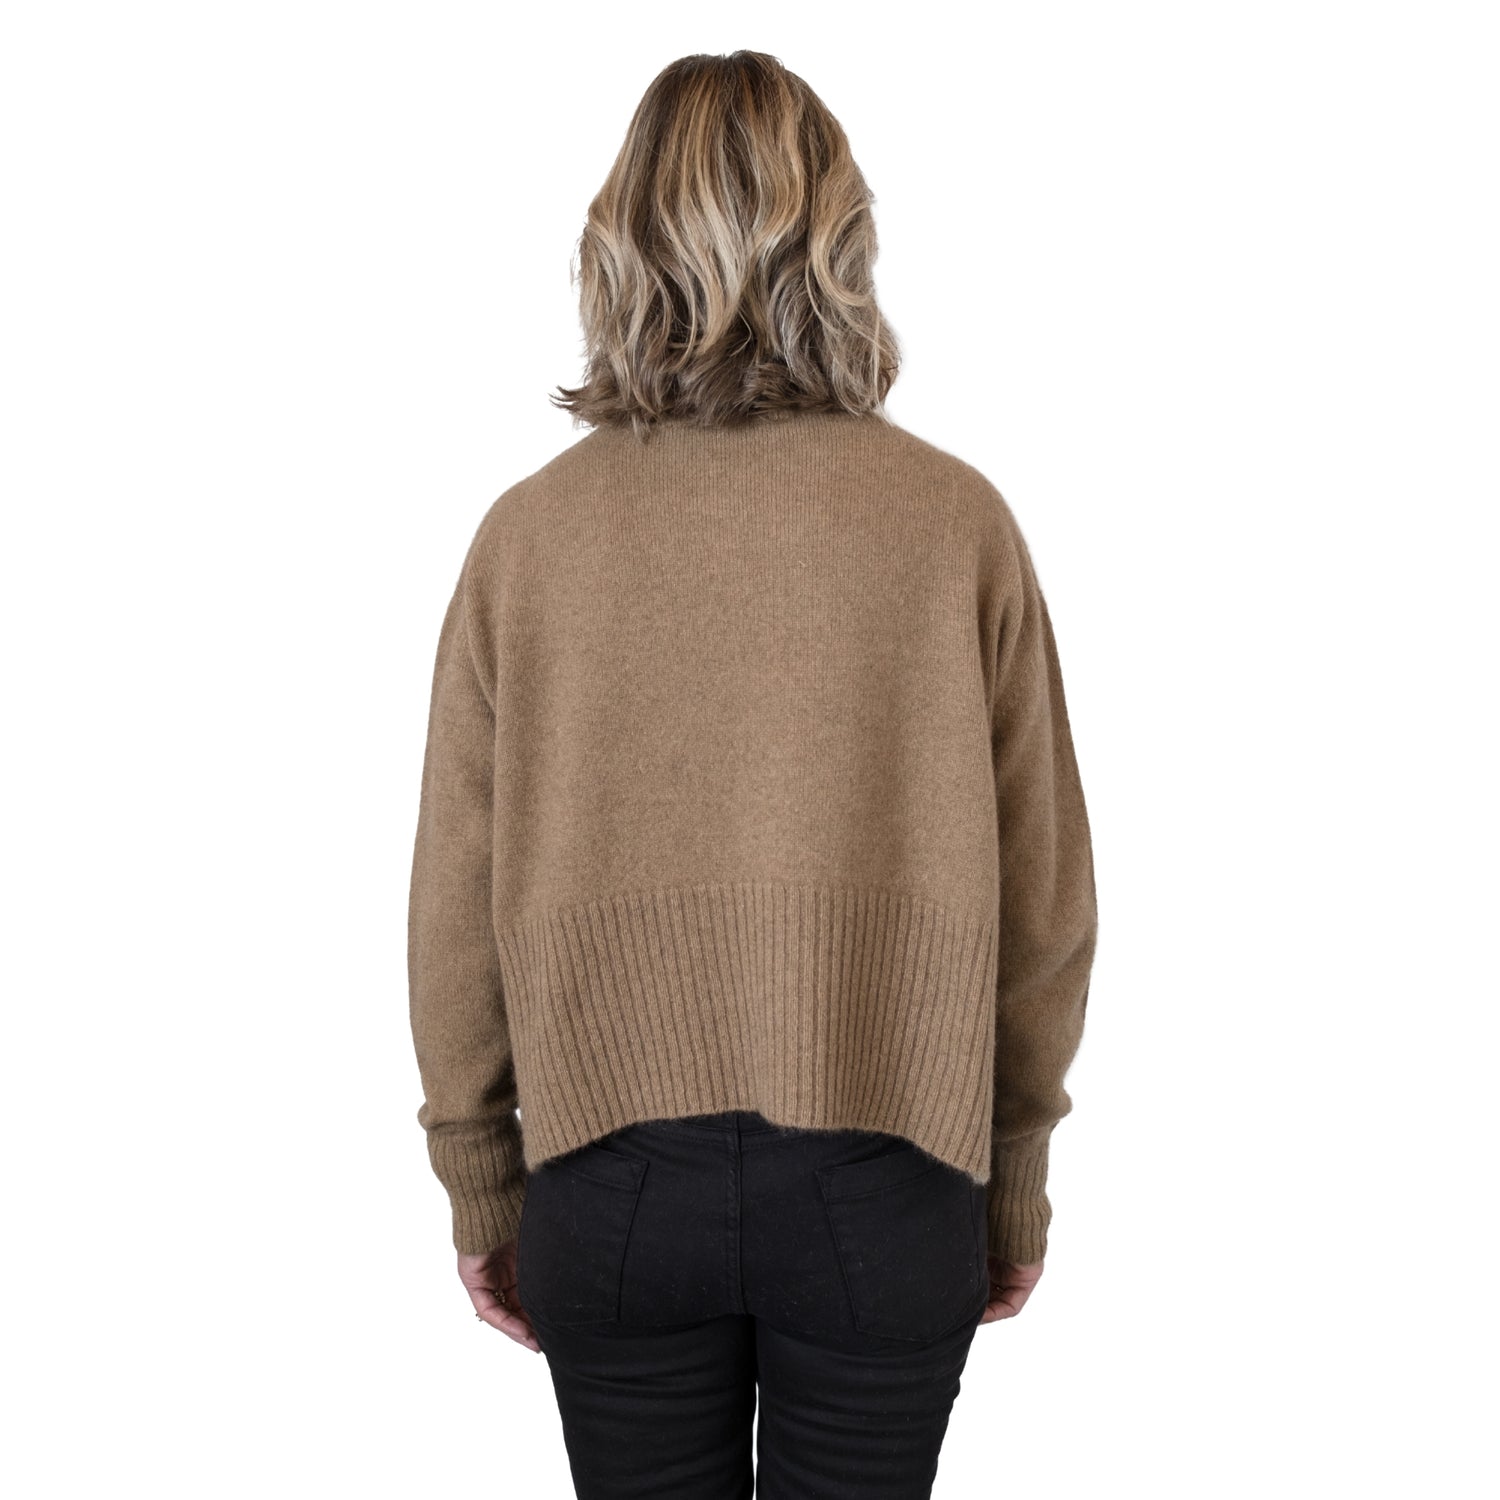 Split Hem Sweater in colour Caramel. Loose turtleneck. Back